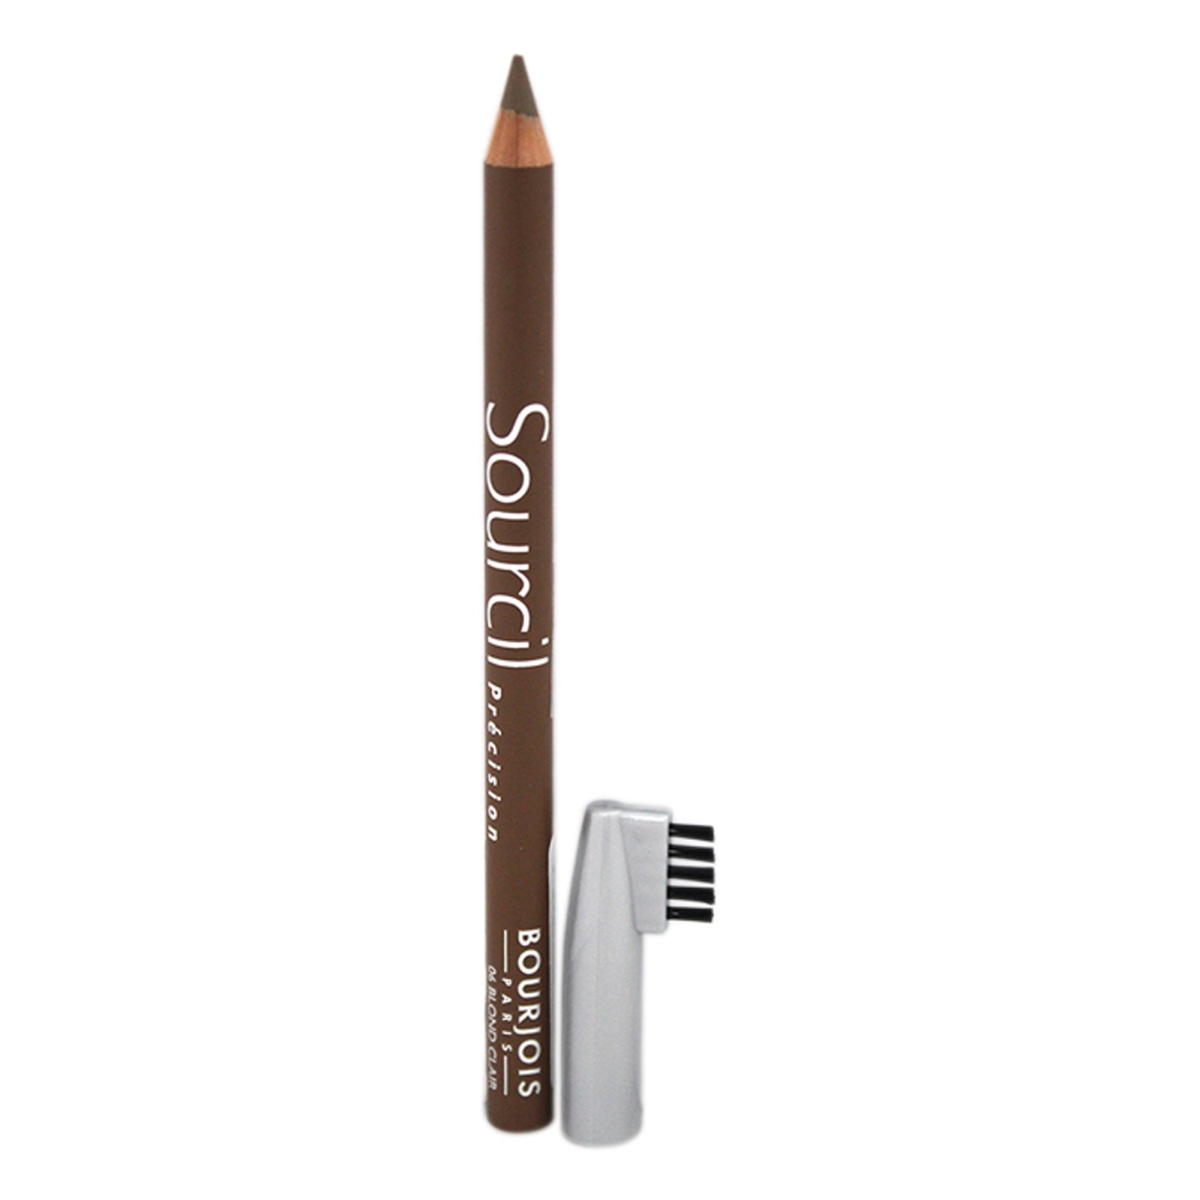 W-c-9696 0.04 Oz No. 06 Sourcil Precision Blond Clair Eyebrow Pencil For Women